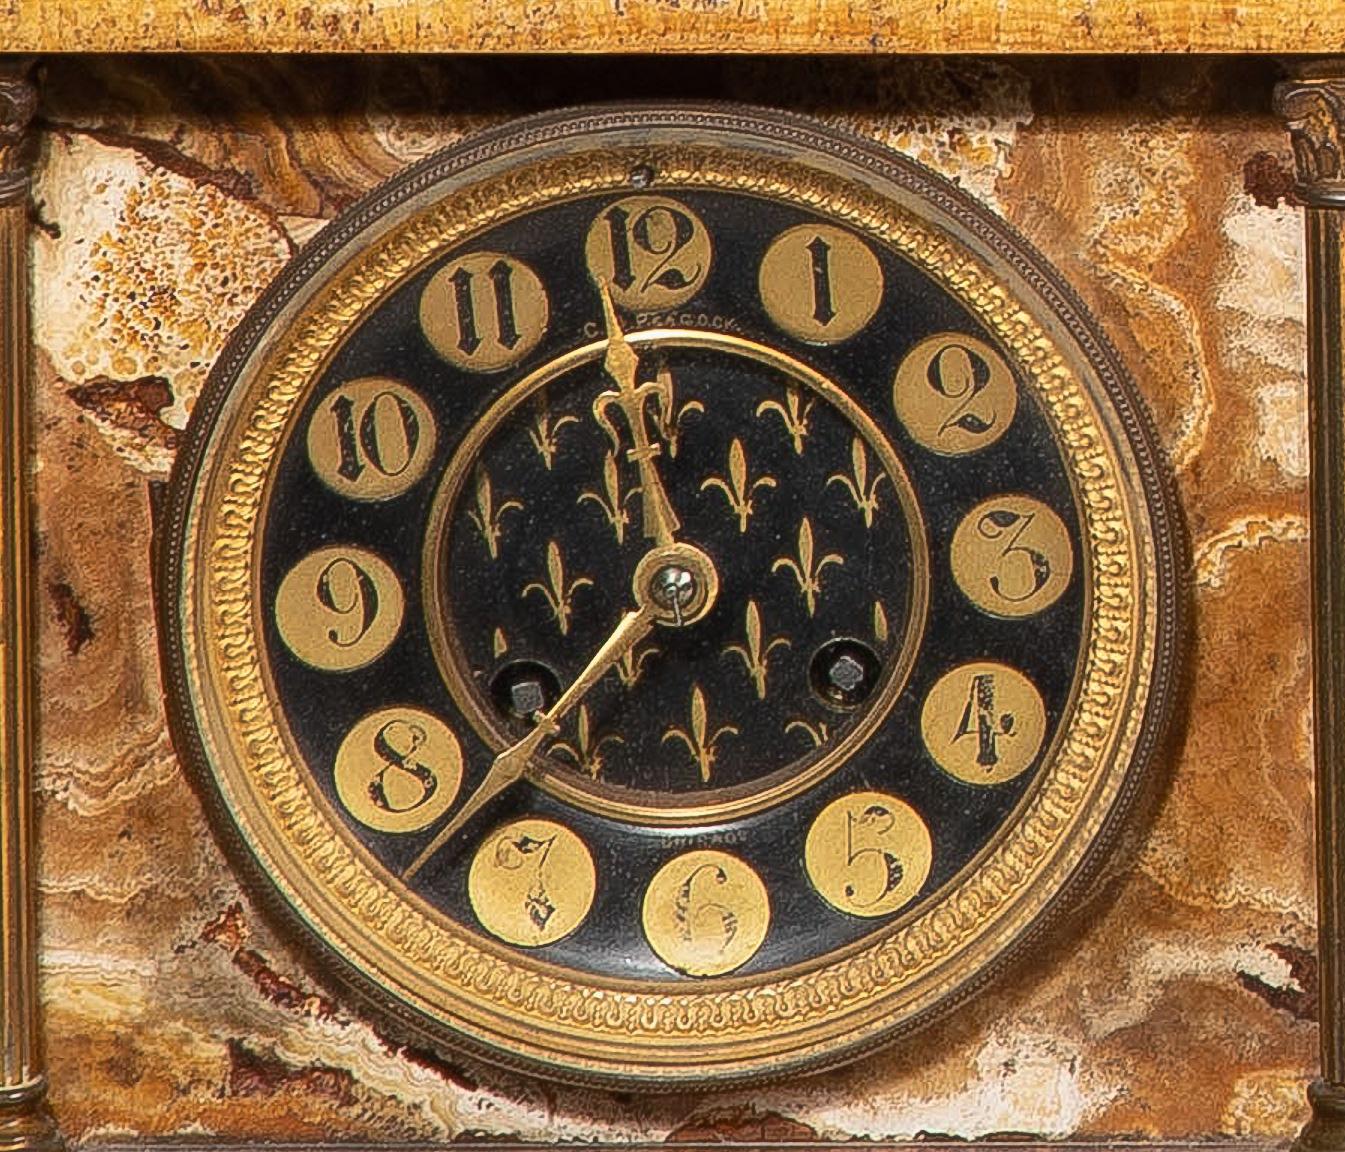 Mantel Clocks